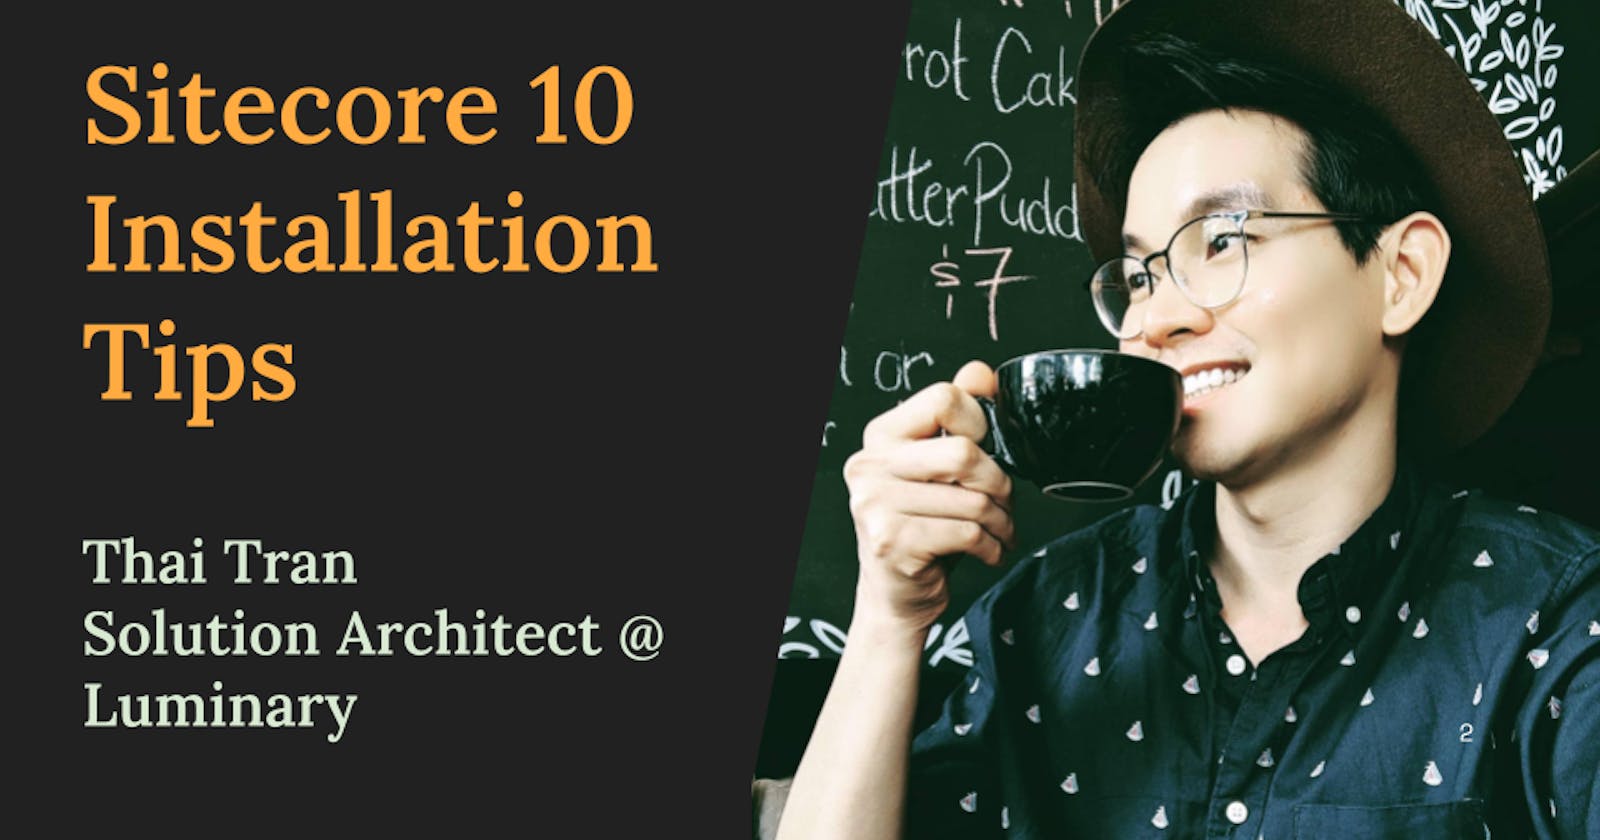 Sitecore 10 Installation Tips